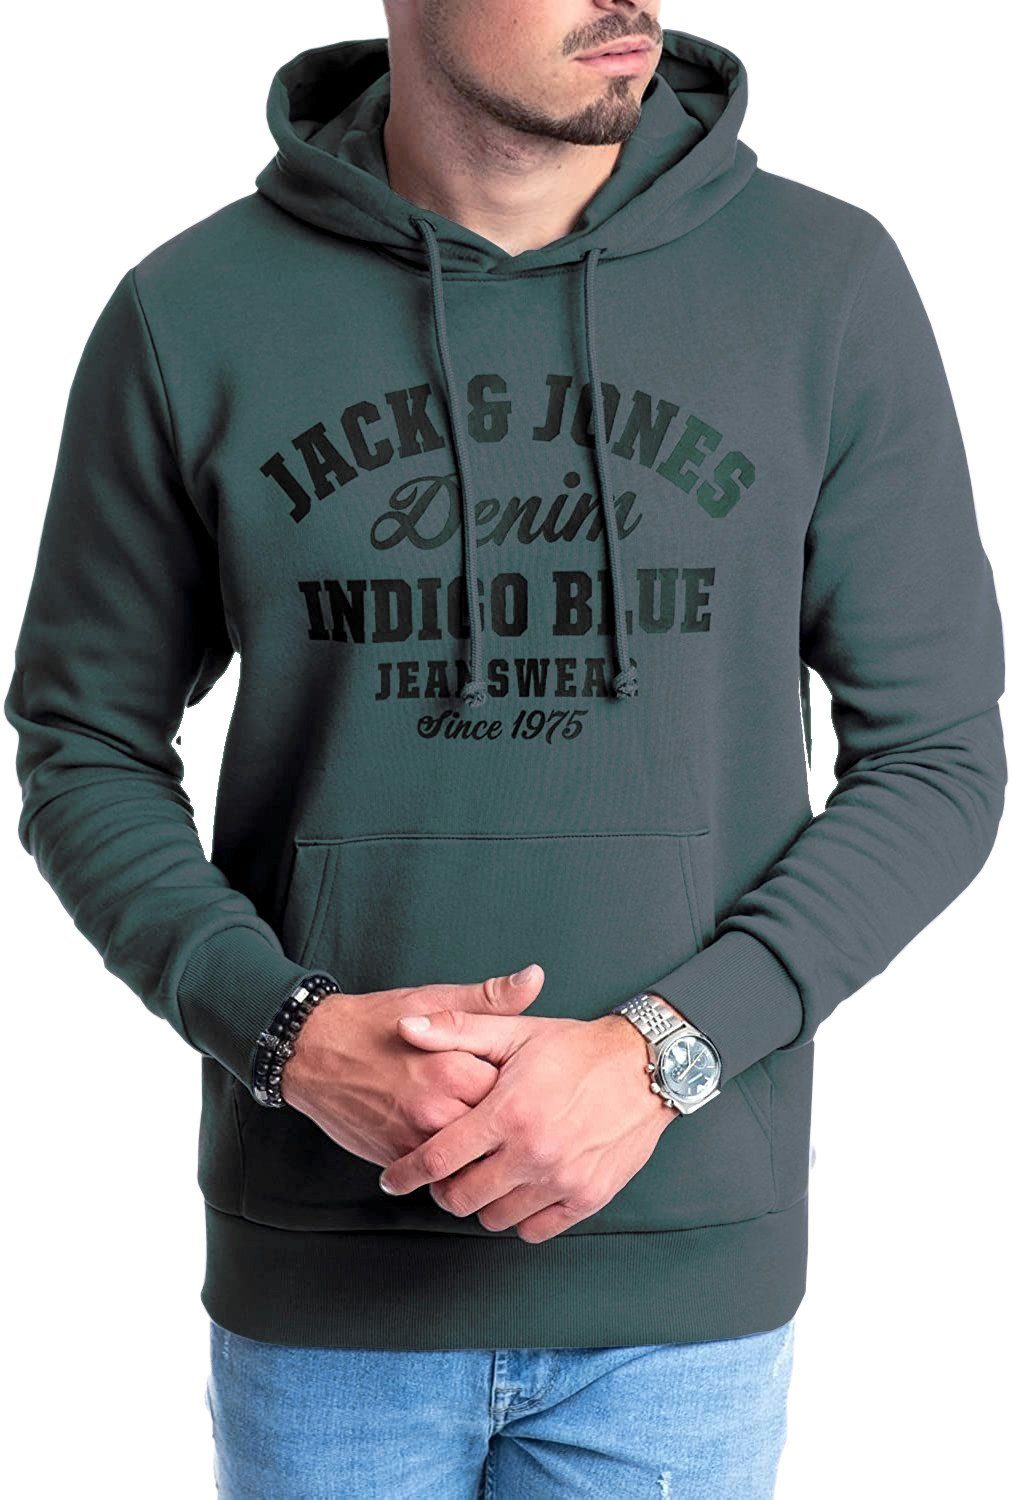 Unifarbe Dark & Kängurutasche, T-Shirt Kapuze, in Slate-Black mit Jack Jones Logodruck, mit